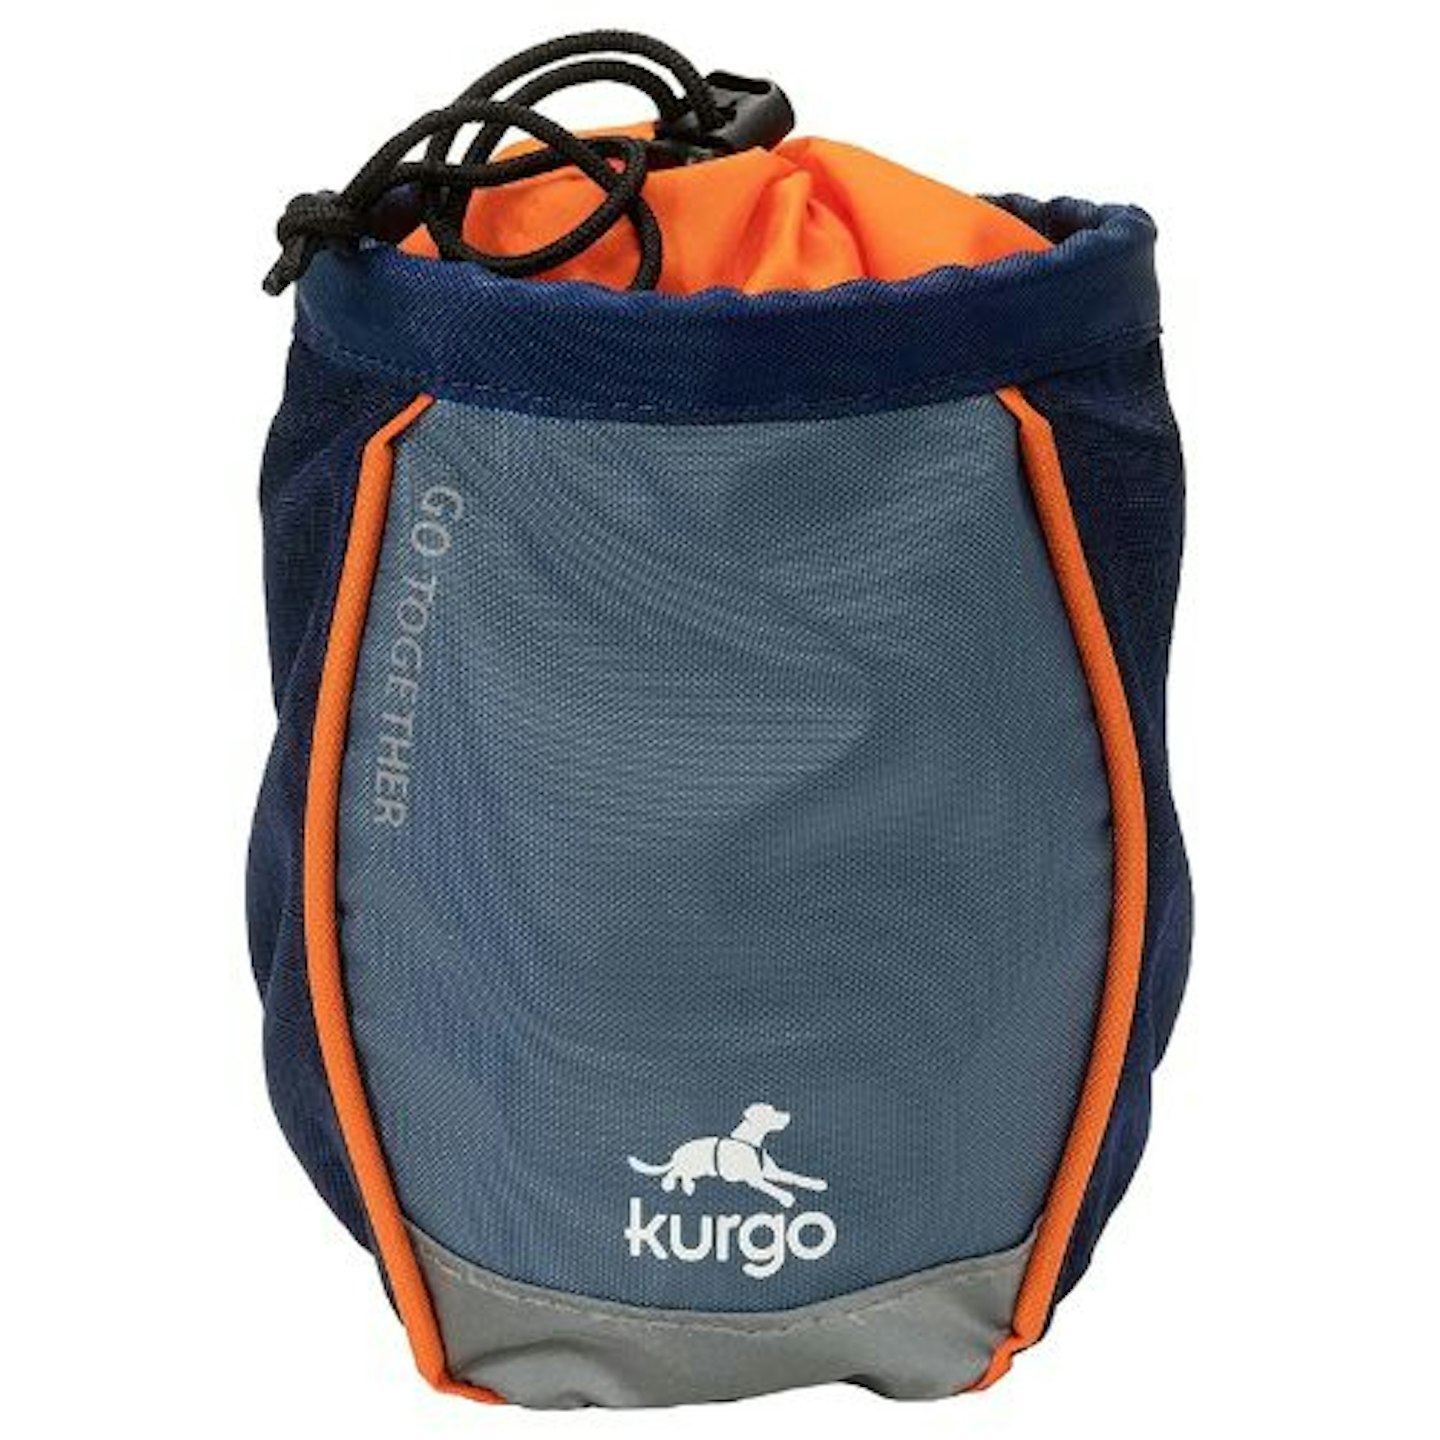 Kurgo - Go Stuff It Treat Bag